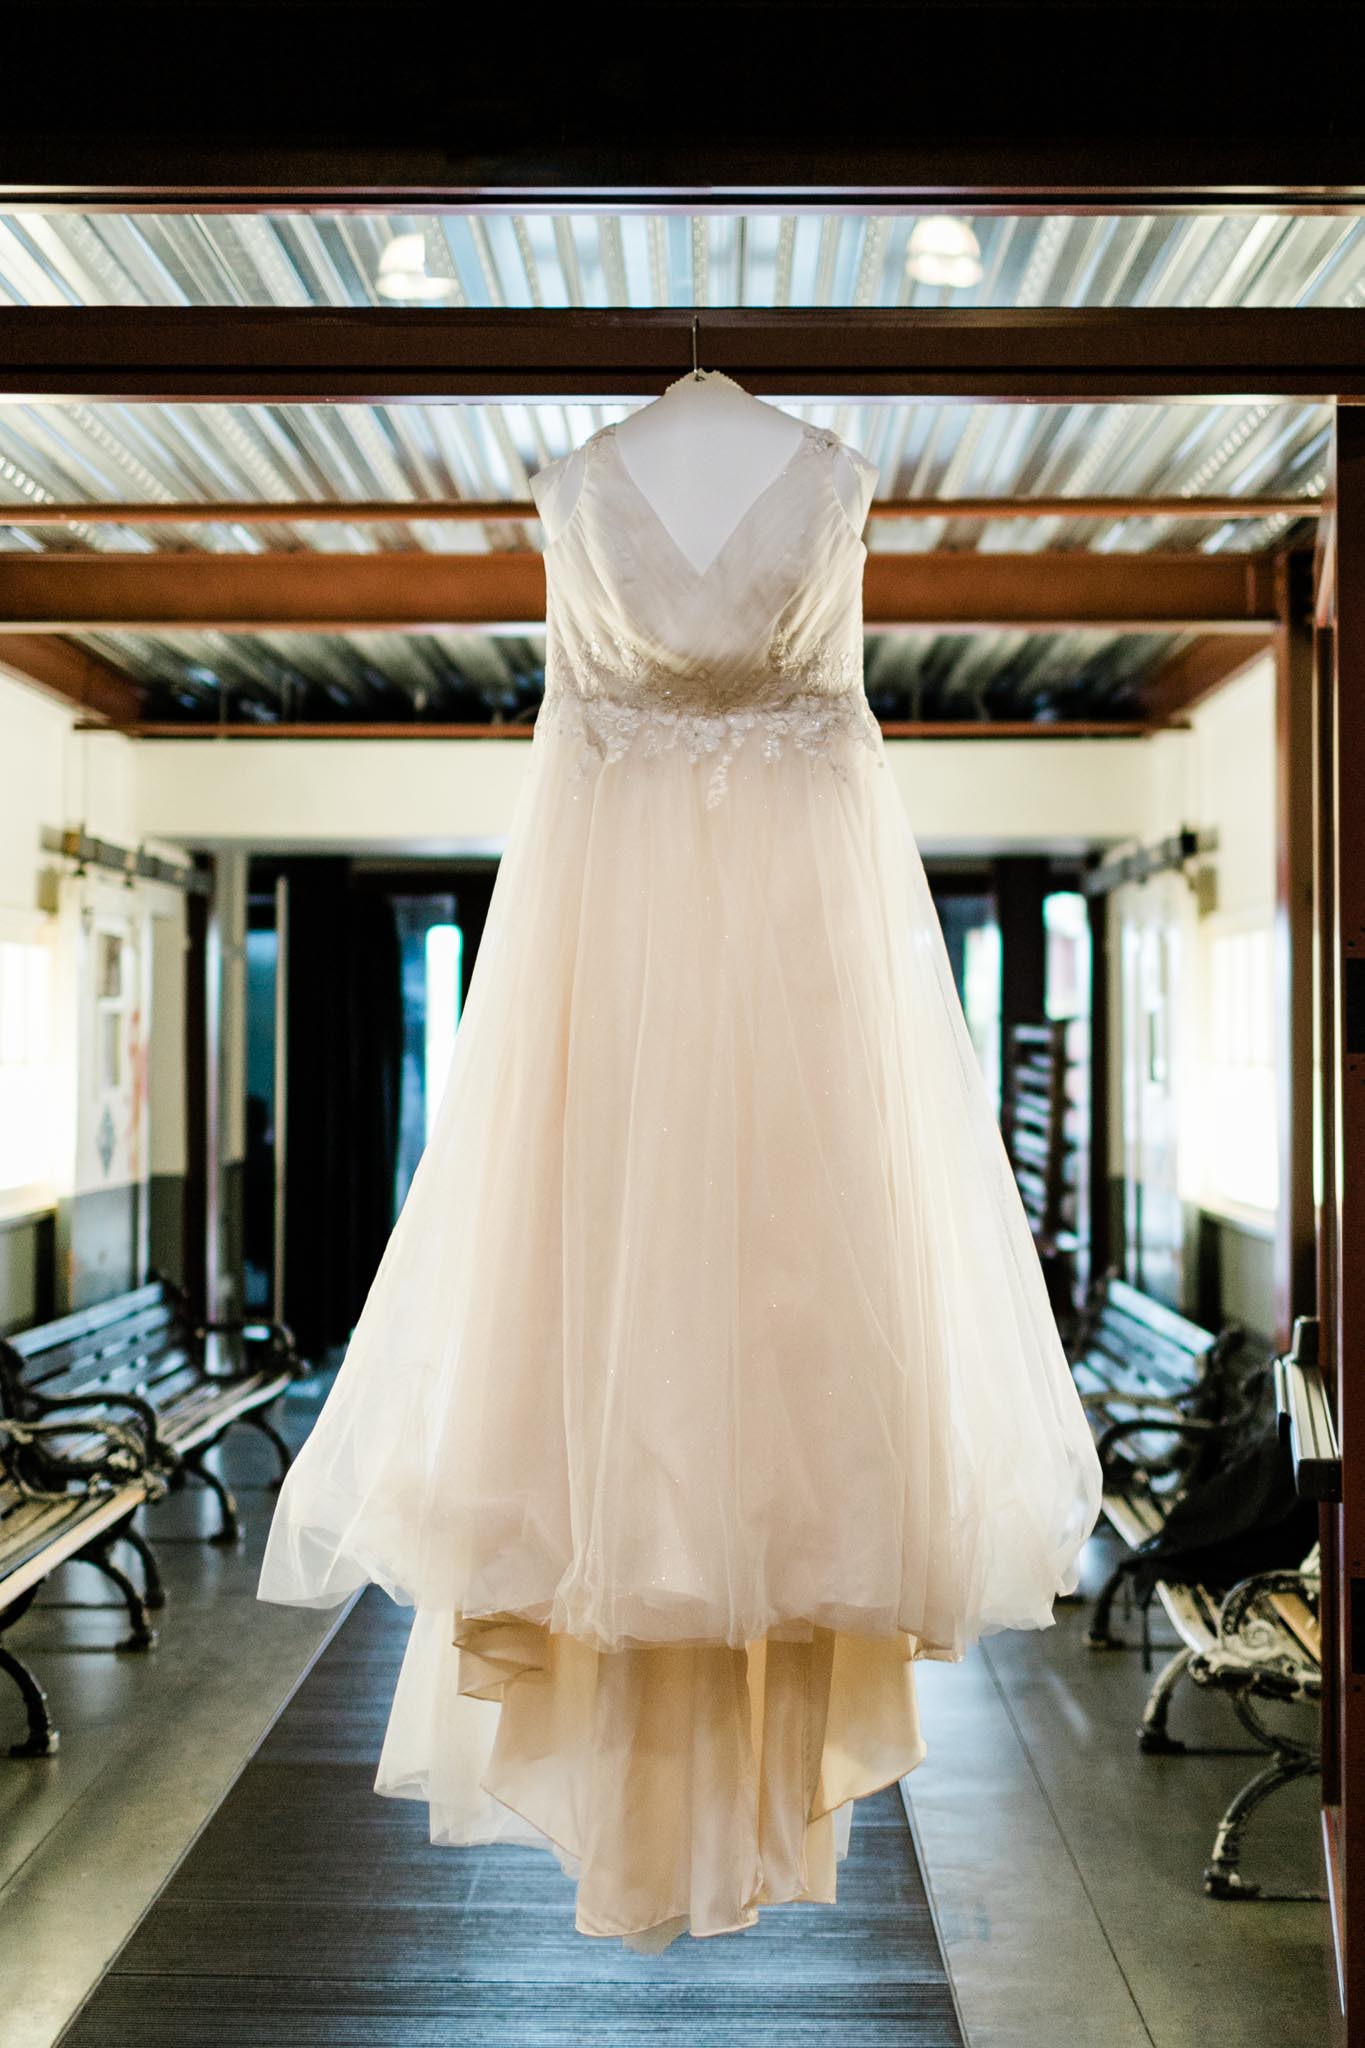 Haw River Ballroom Wedding | Durham Photographer | By G. Lin Photography | Wedding Dress hanging on doorway